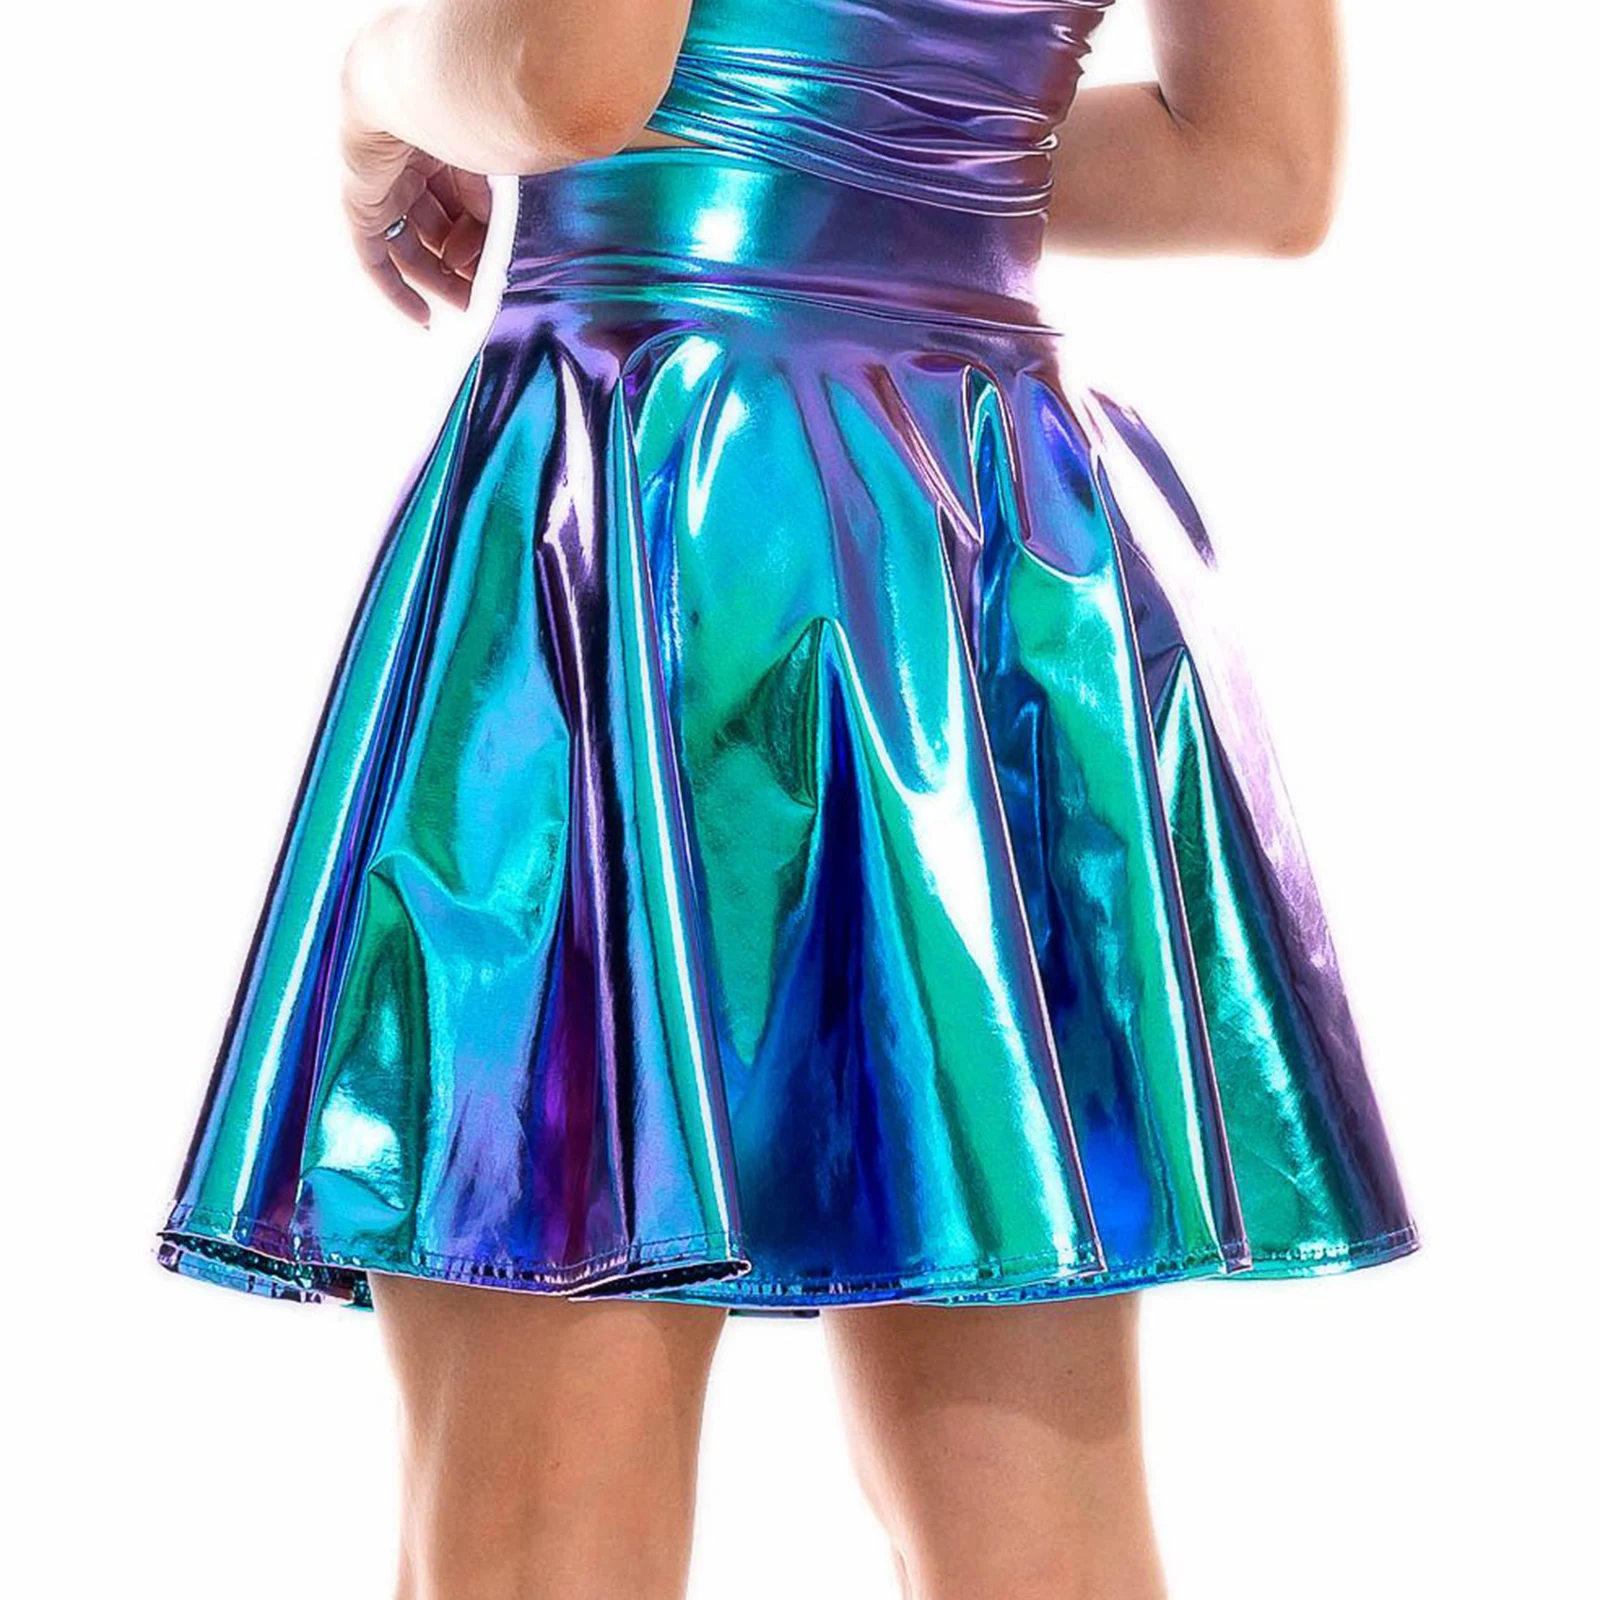 Women's Wetlook Skirt Short Mini Skirt Shiny Metallic Pleated Skirt High Waist Flare Skirt Dance Party Rave Club Bar Costume